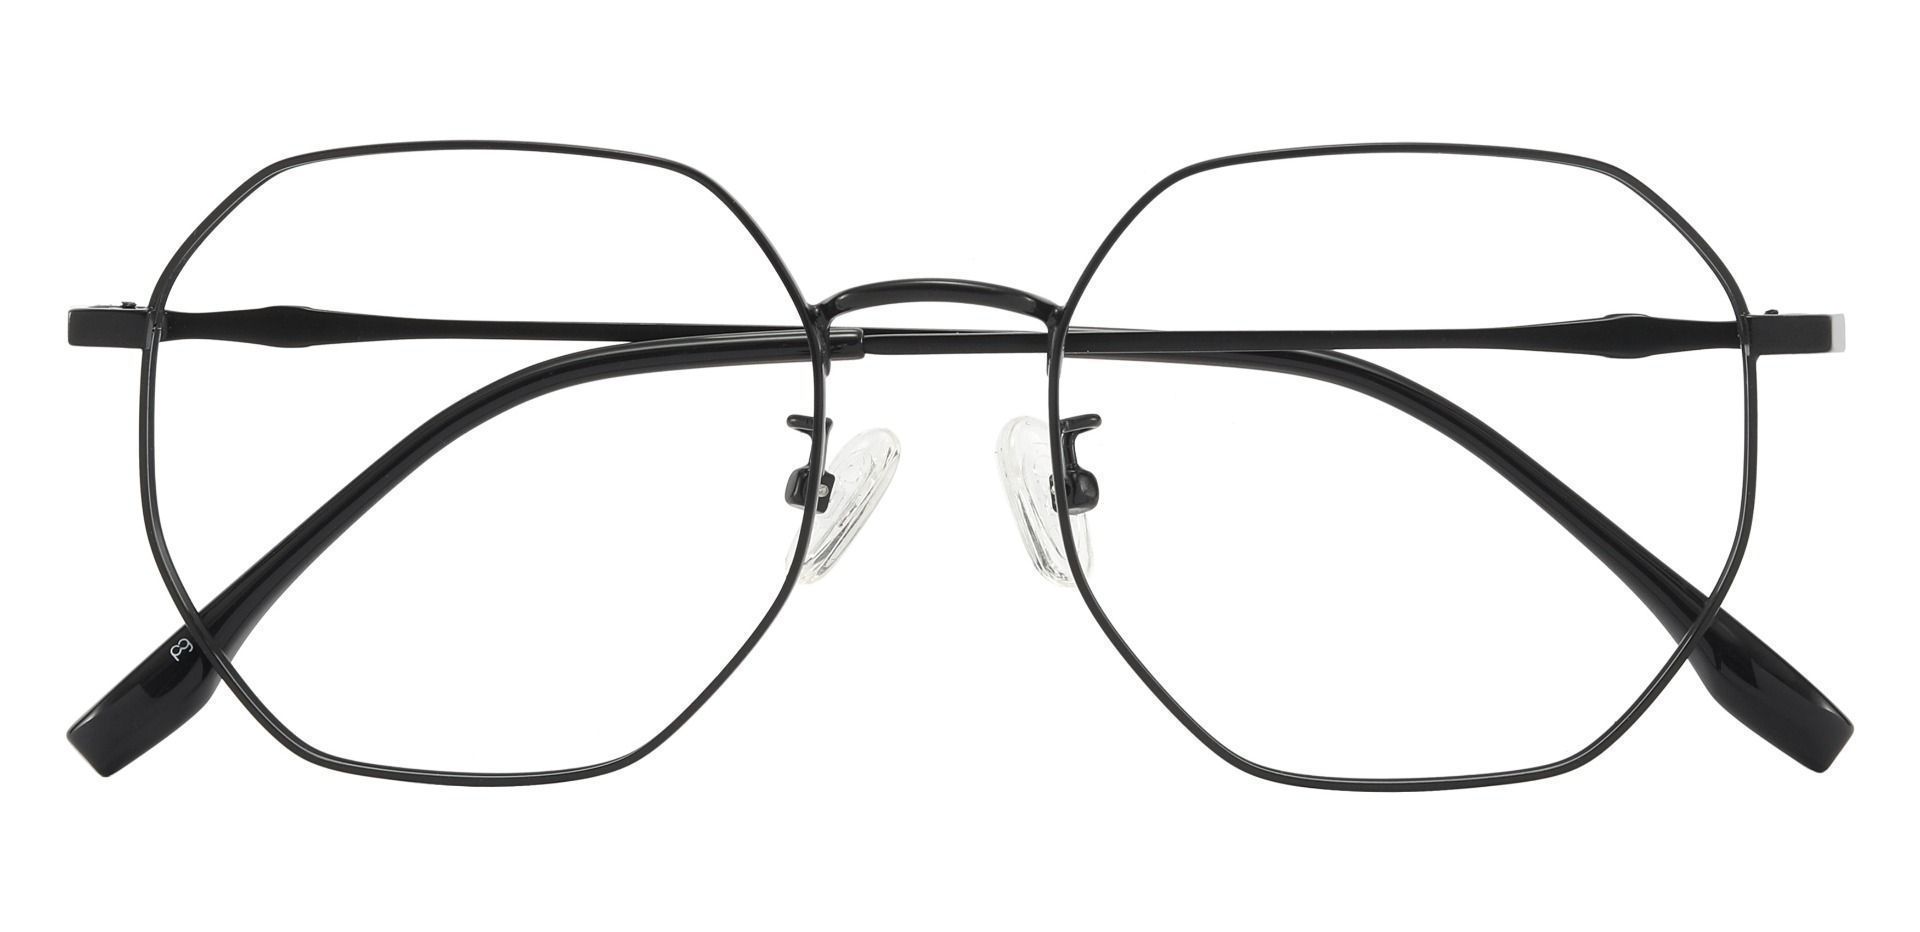 Cowan Geometric Progressive Glasses - Black